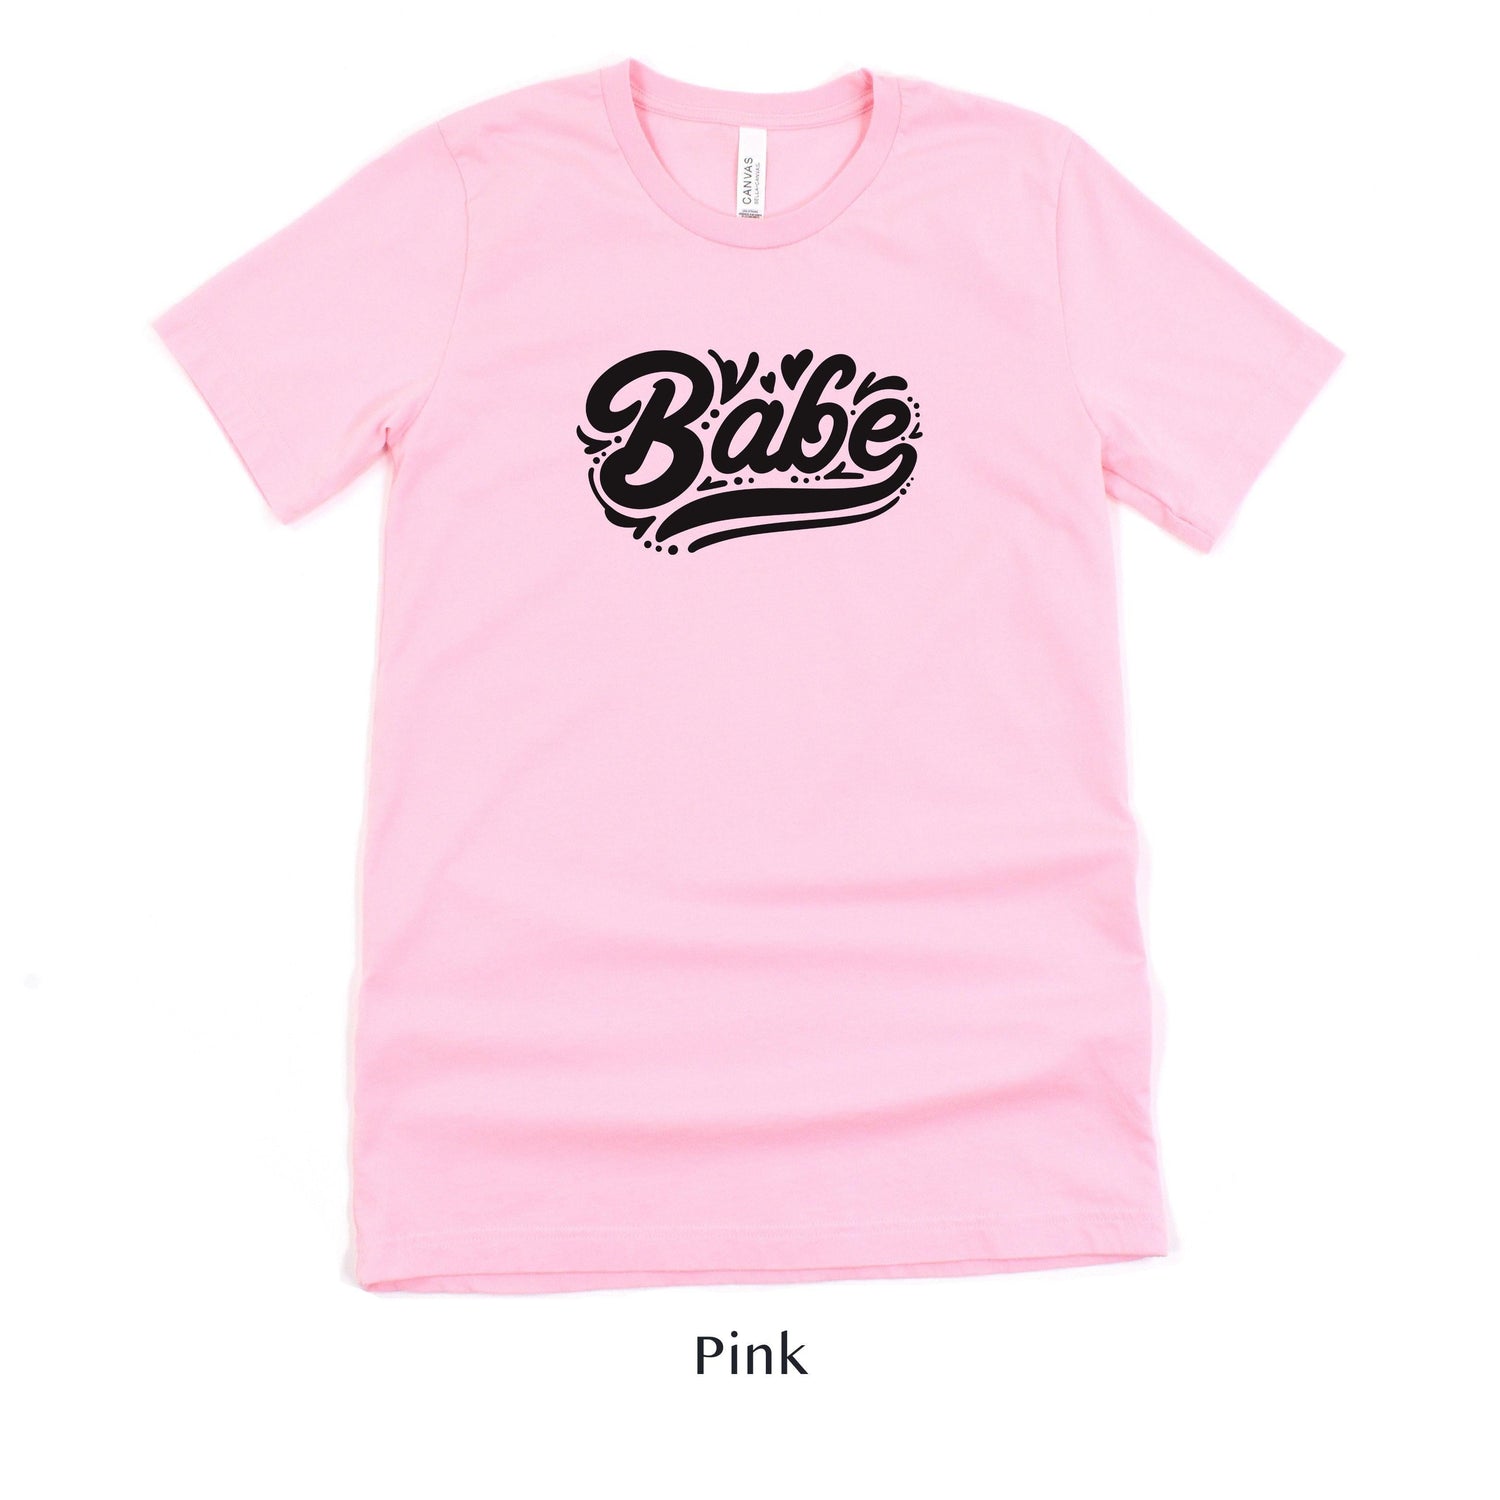 Babe - Wedding Party - Bach Party Short-sleeve Tee by Oaklynn Lane - Pink Bridesmaid Shirt